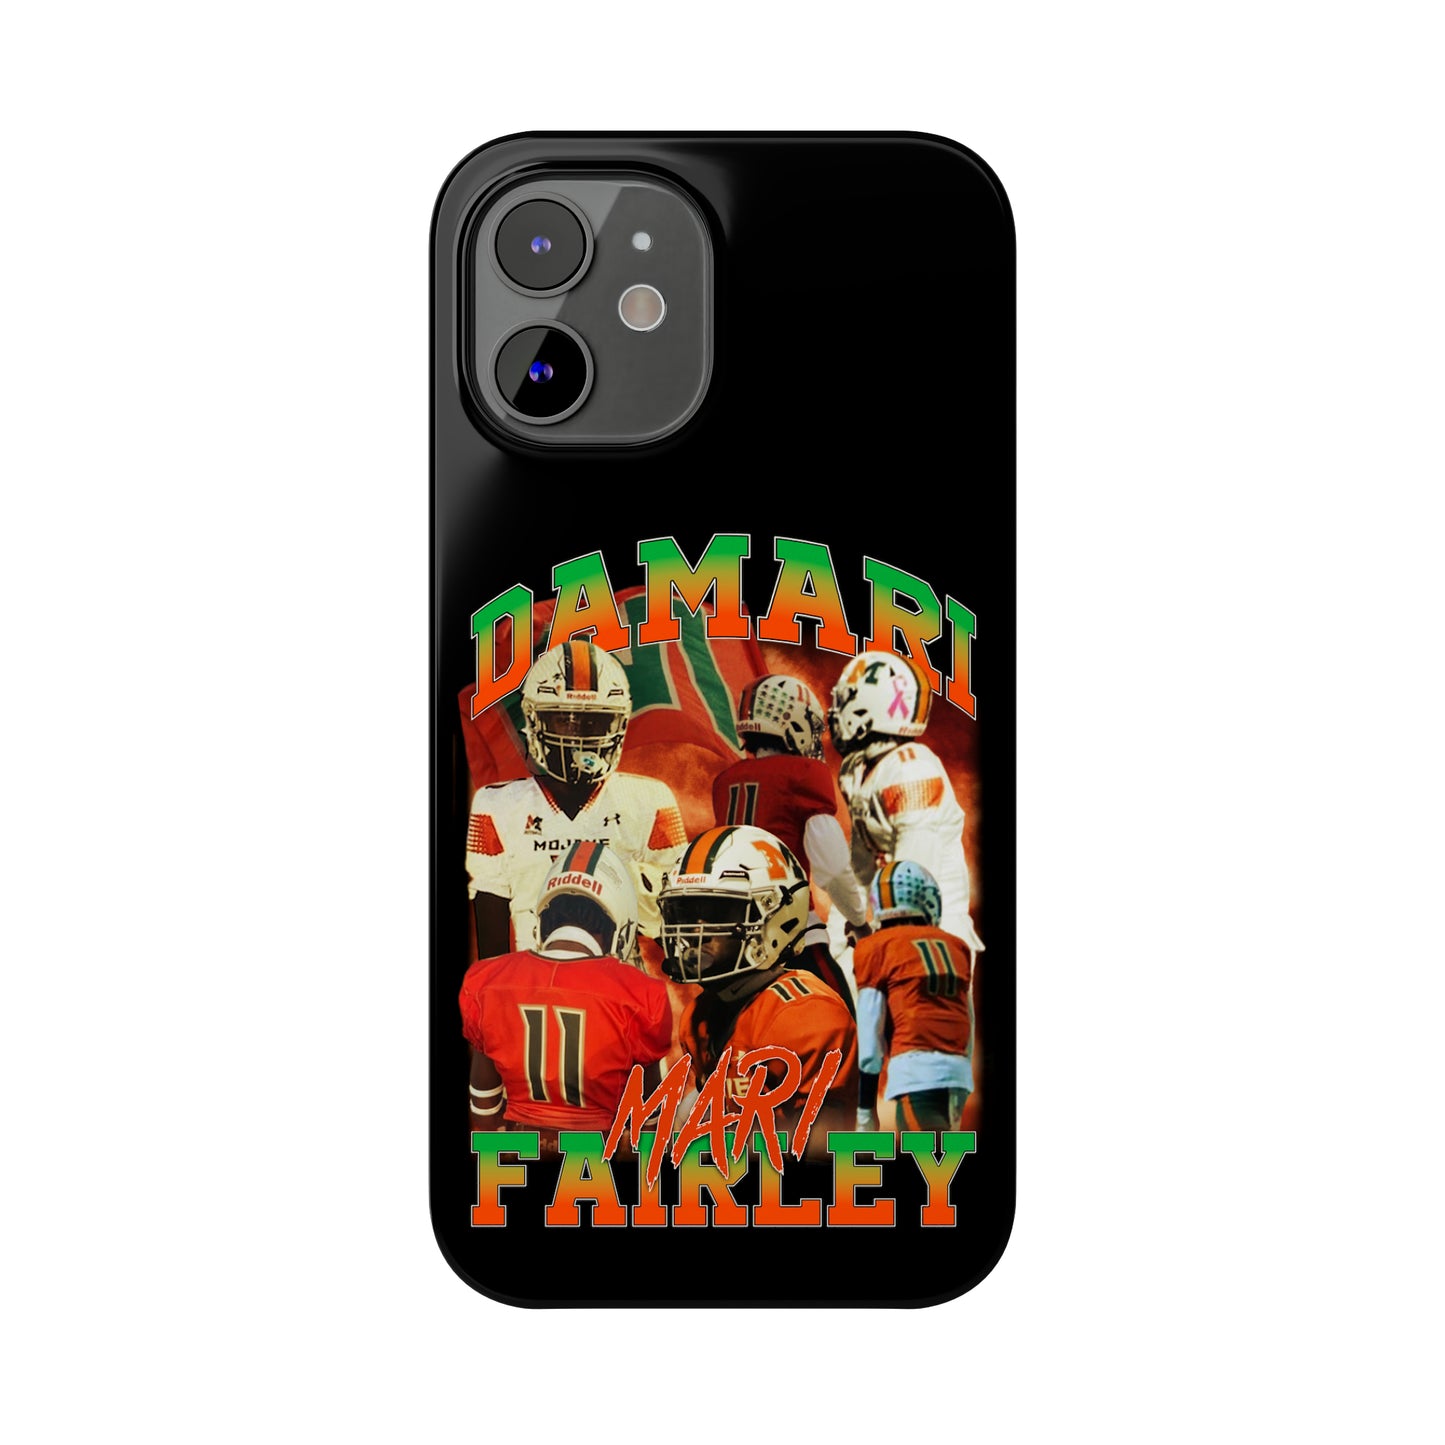 Damari Fairley Phone Case